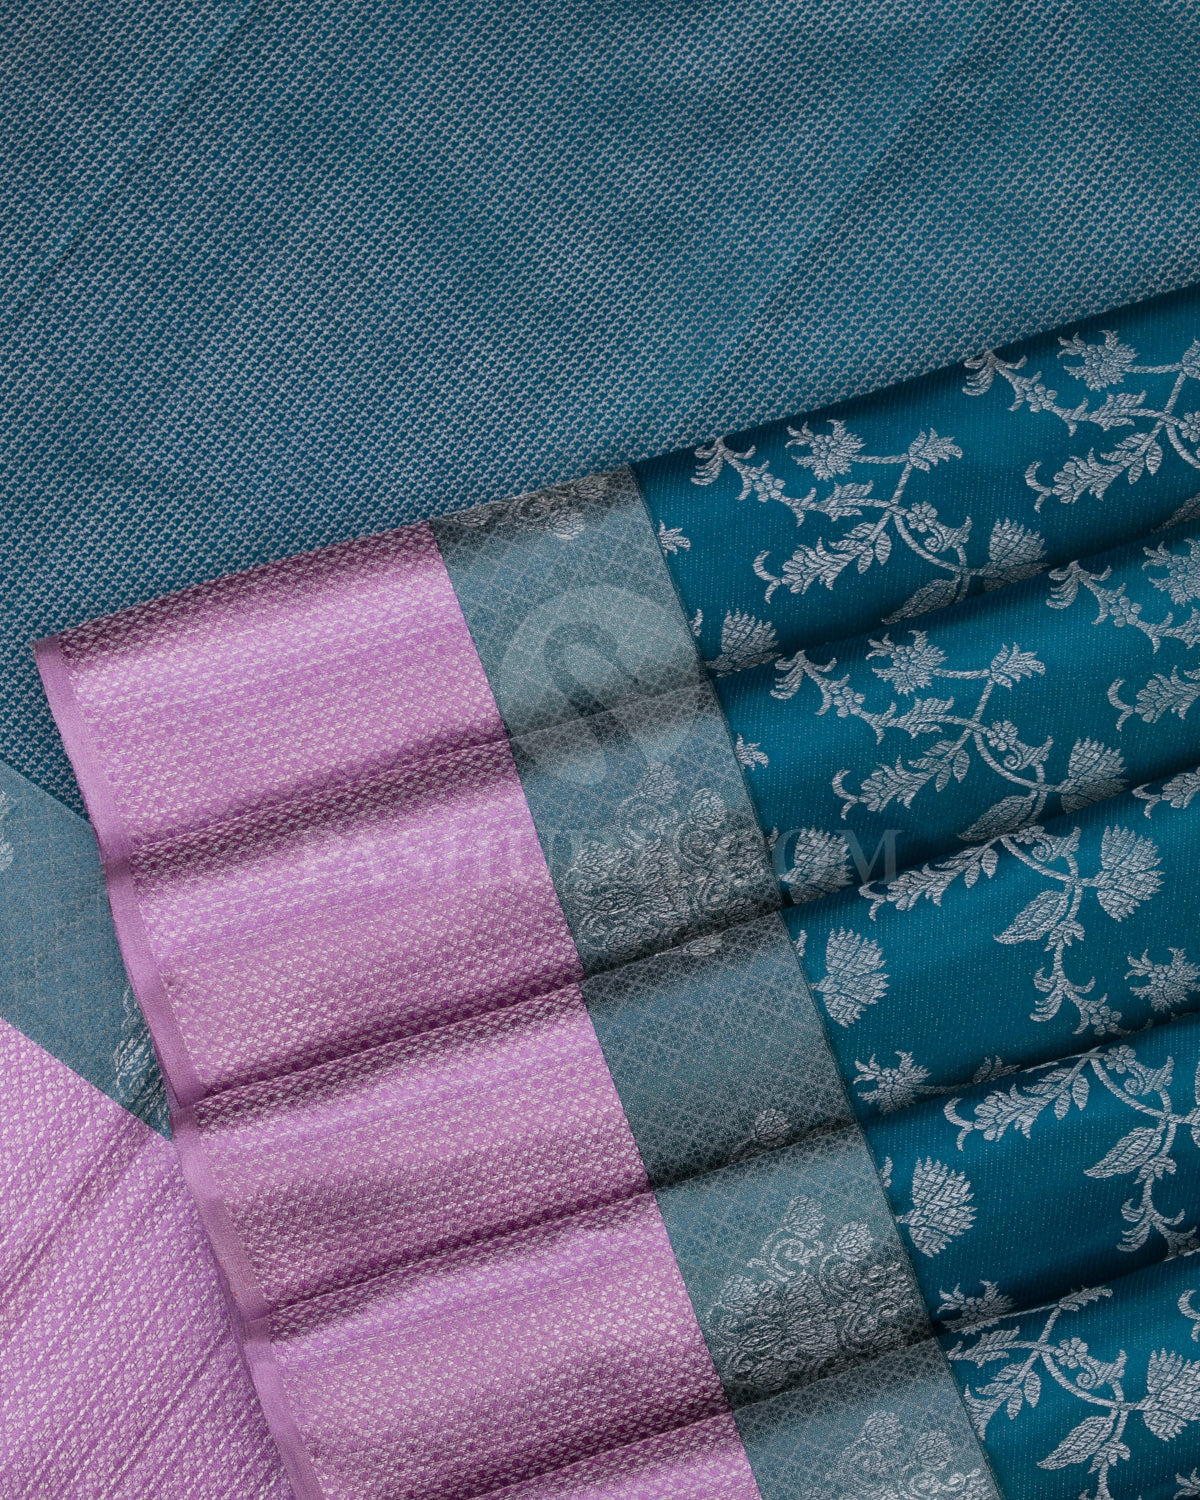 Teal Blue and Lavender Kanjivaram Silk Saree - D427 -View 4